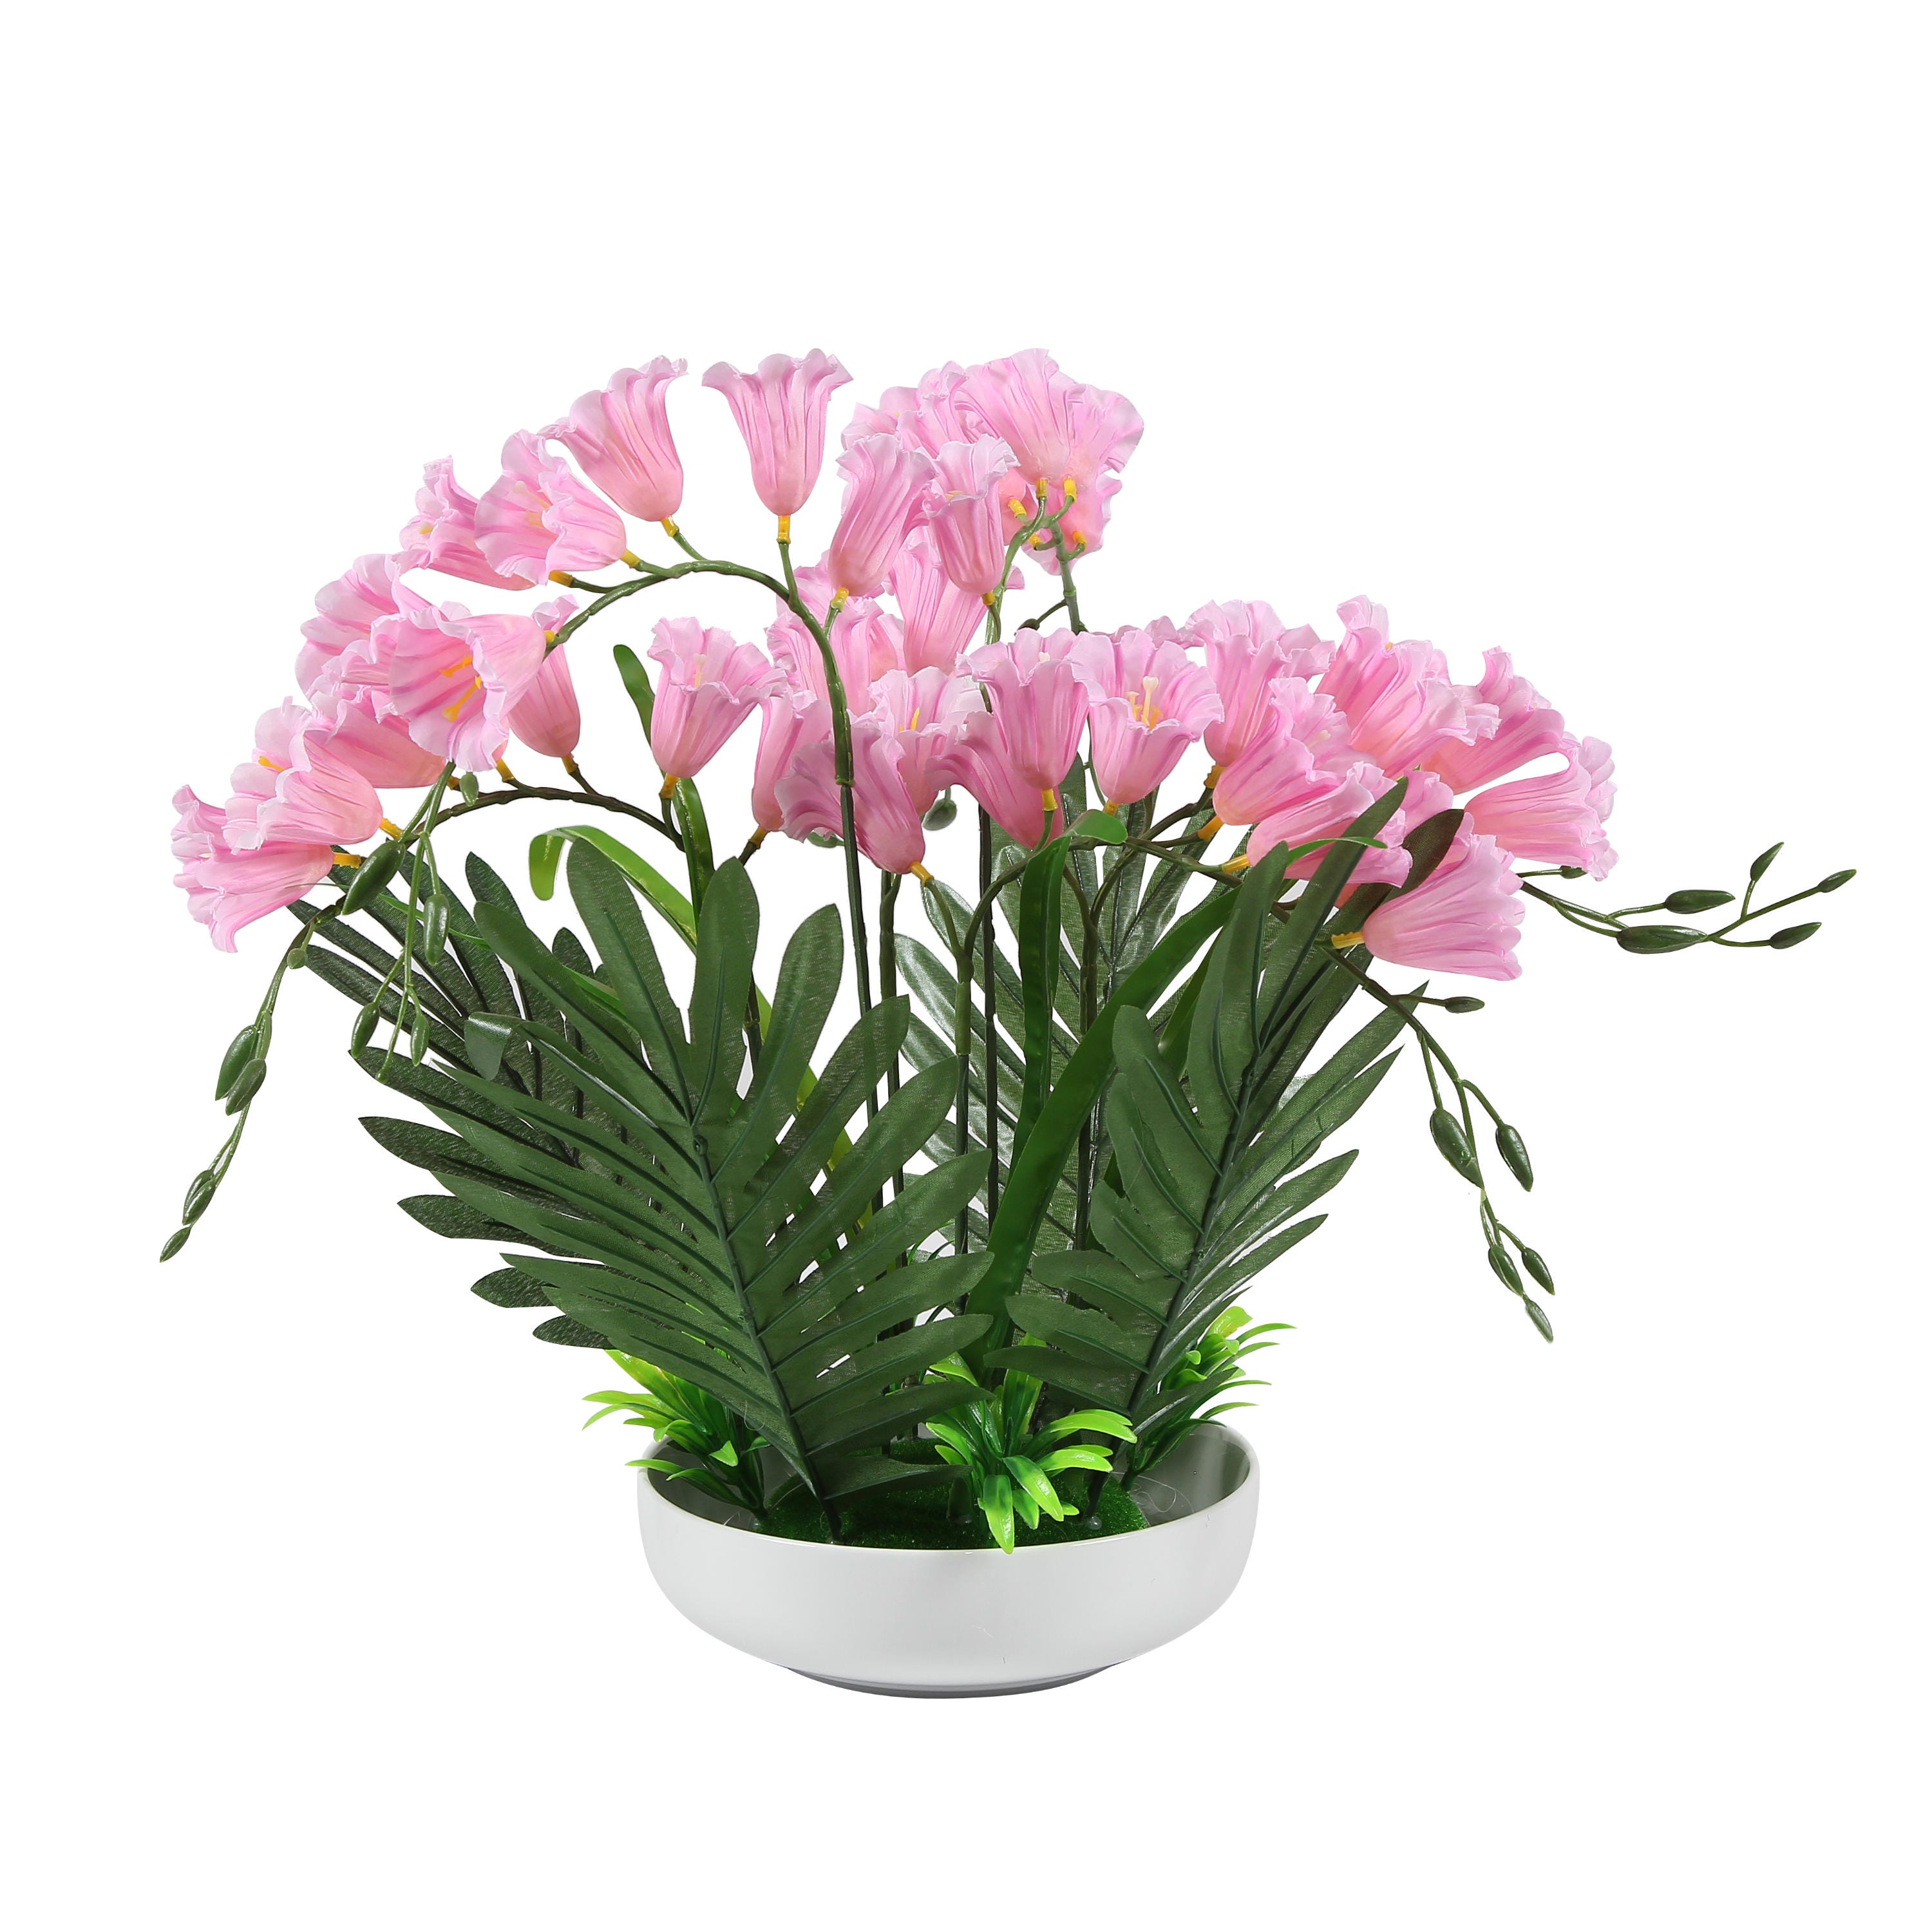 Dedeman artificiala YF81, orhidee roz, 40 cm - Dedicat tale